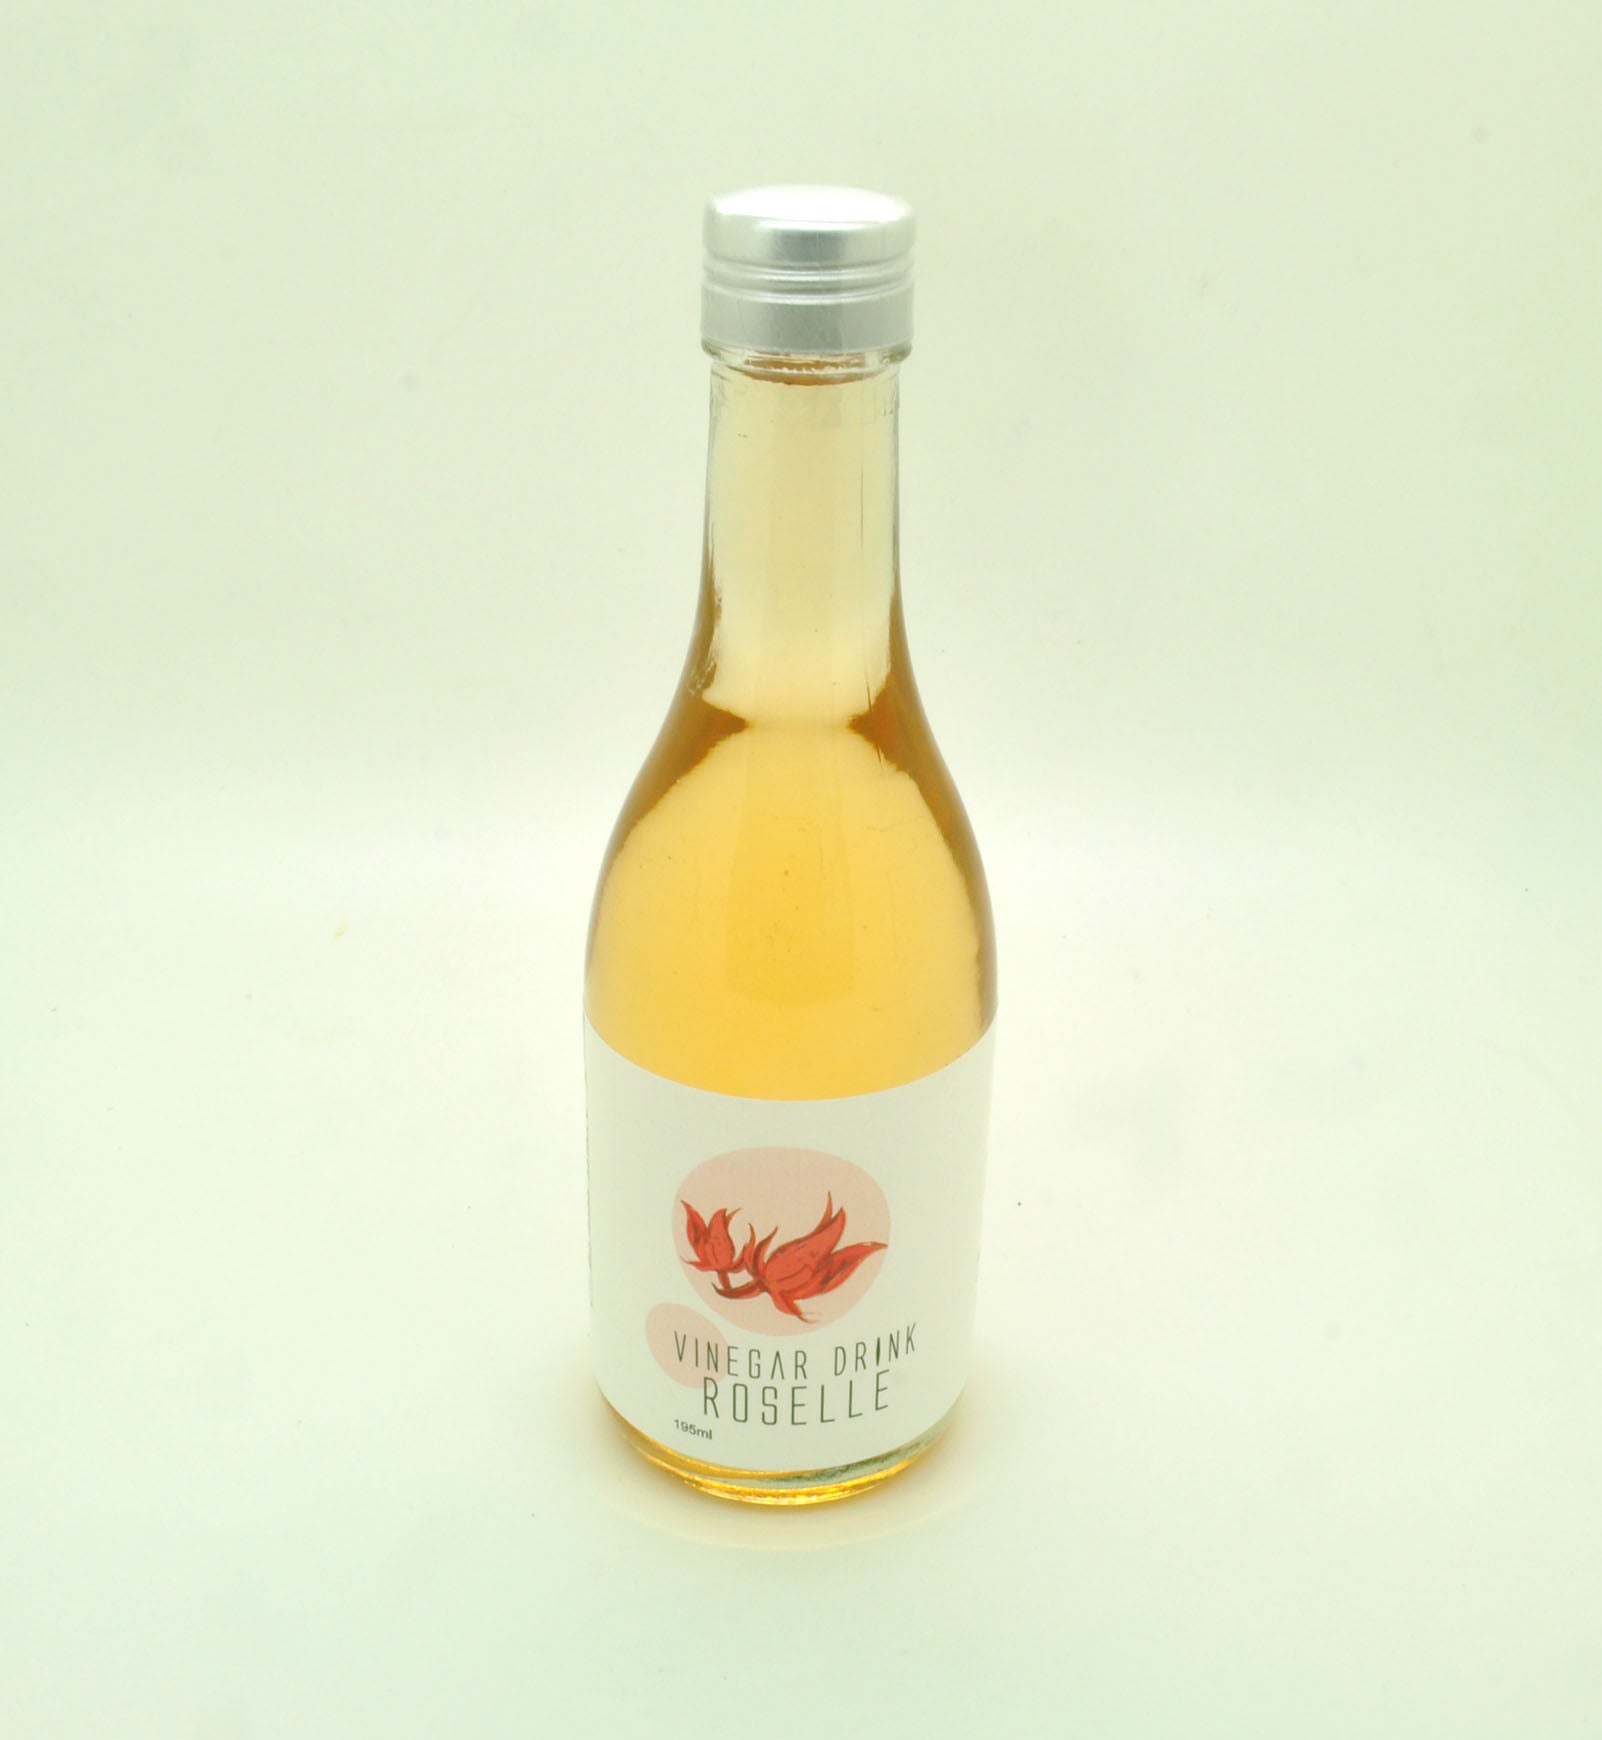 Roselle Vinegar Drink (195 ml) - Fu Kitchen Malaysia